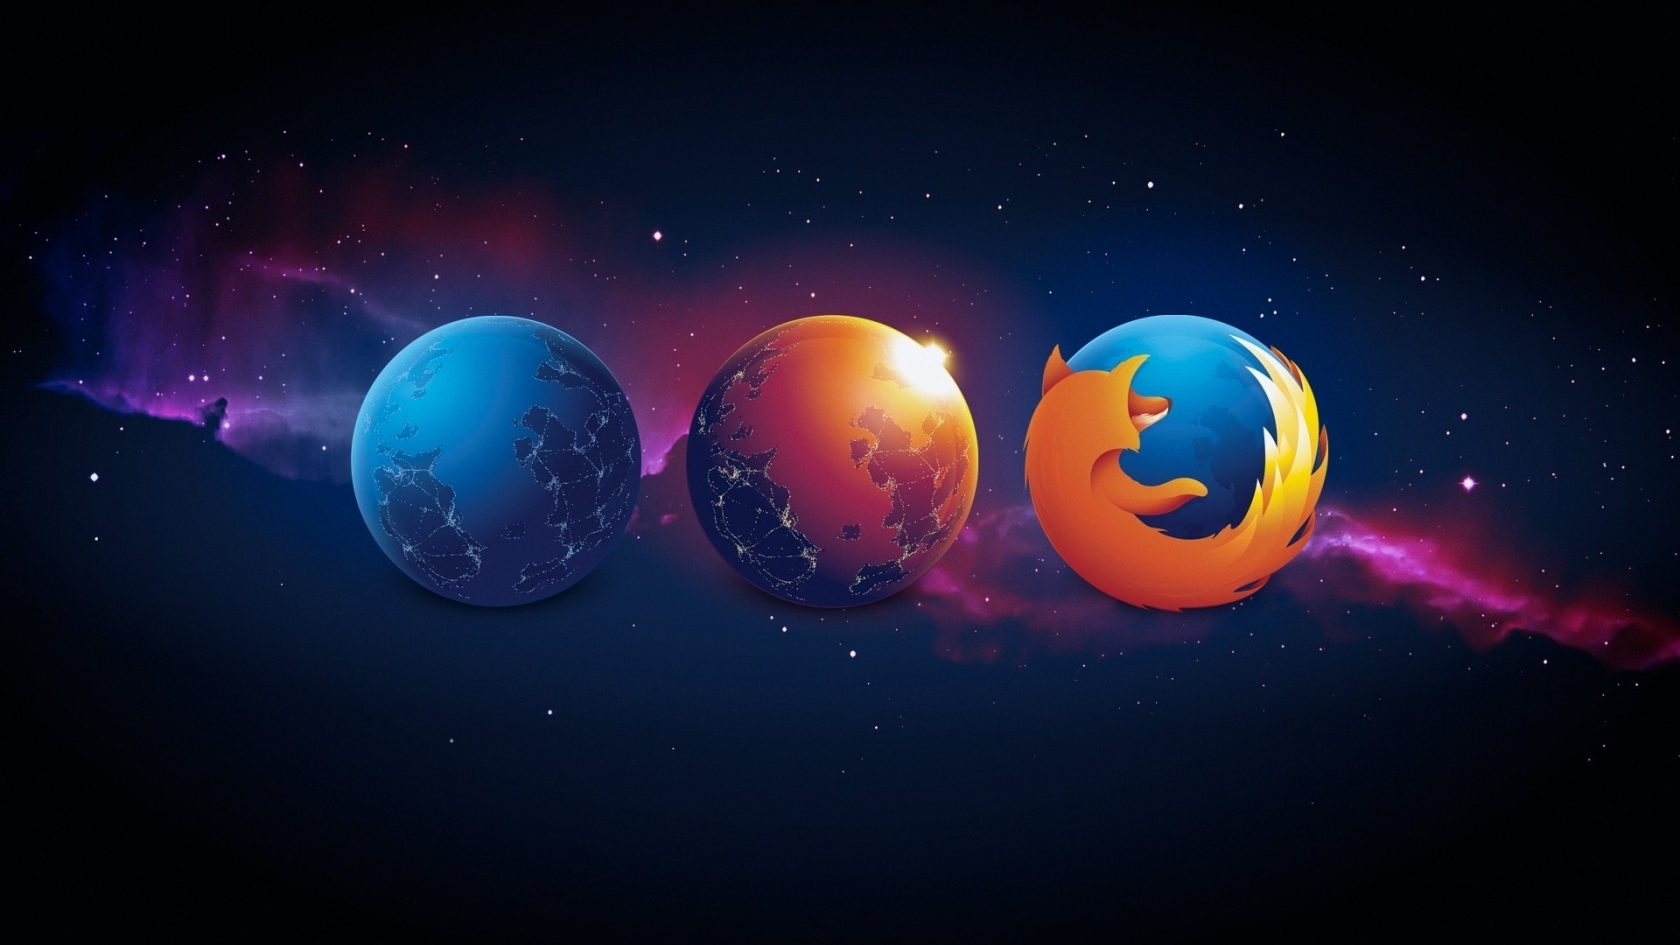 Firefox Planet for 1680 x 945 HDTV resolution